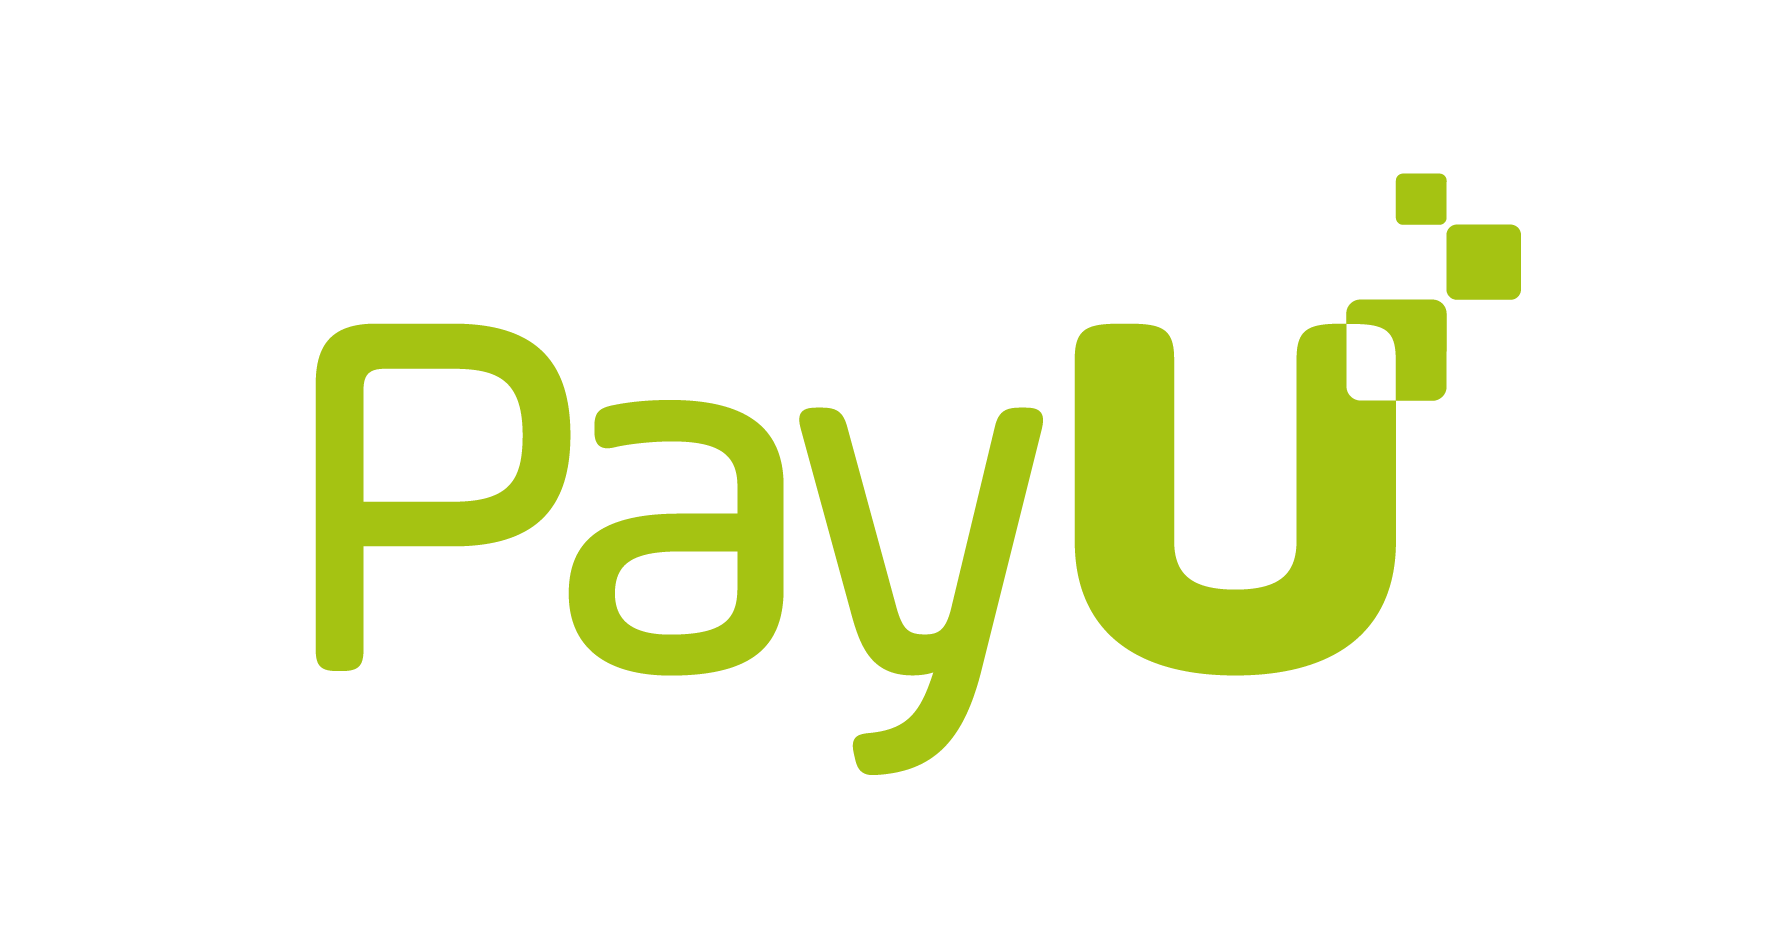 Logo Pay U